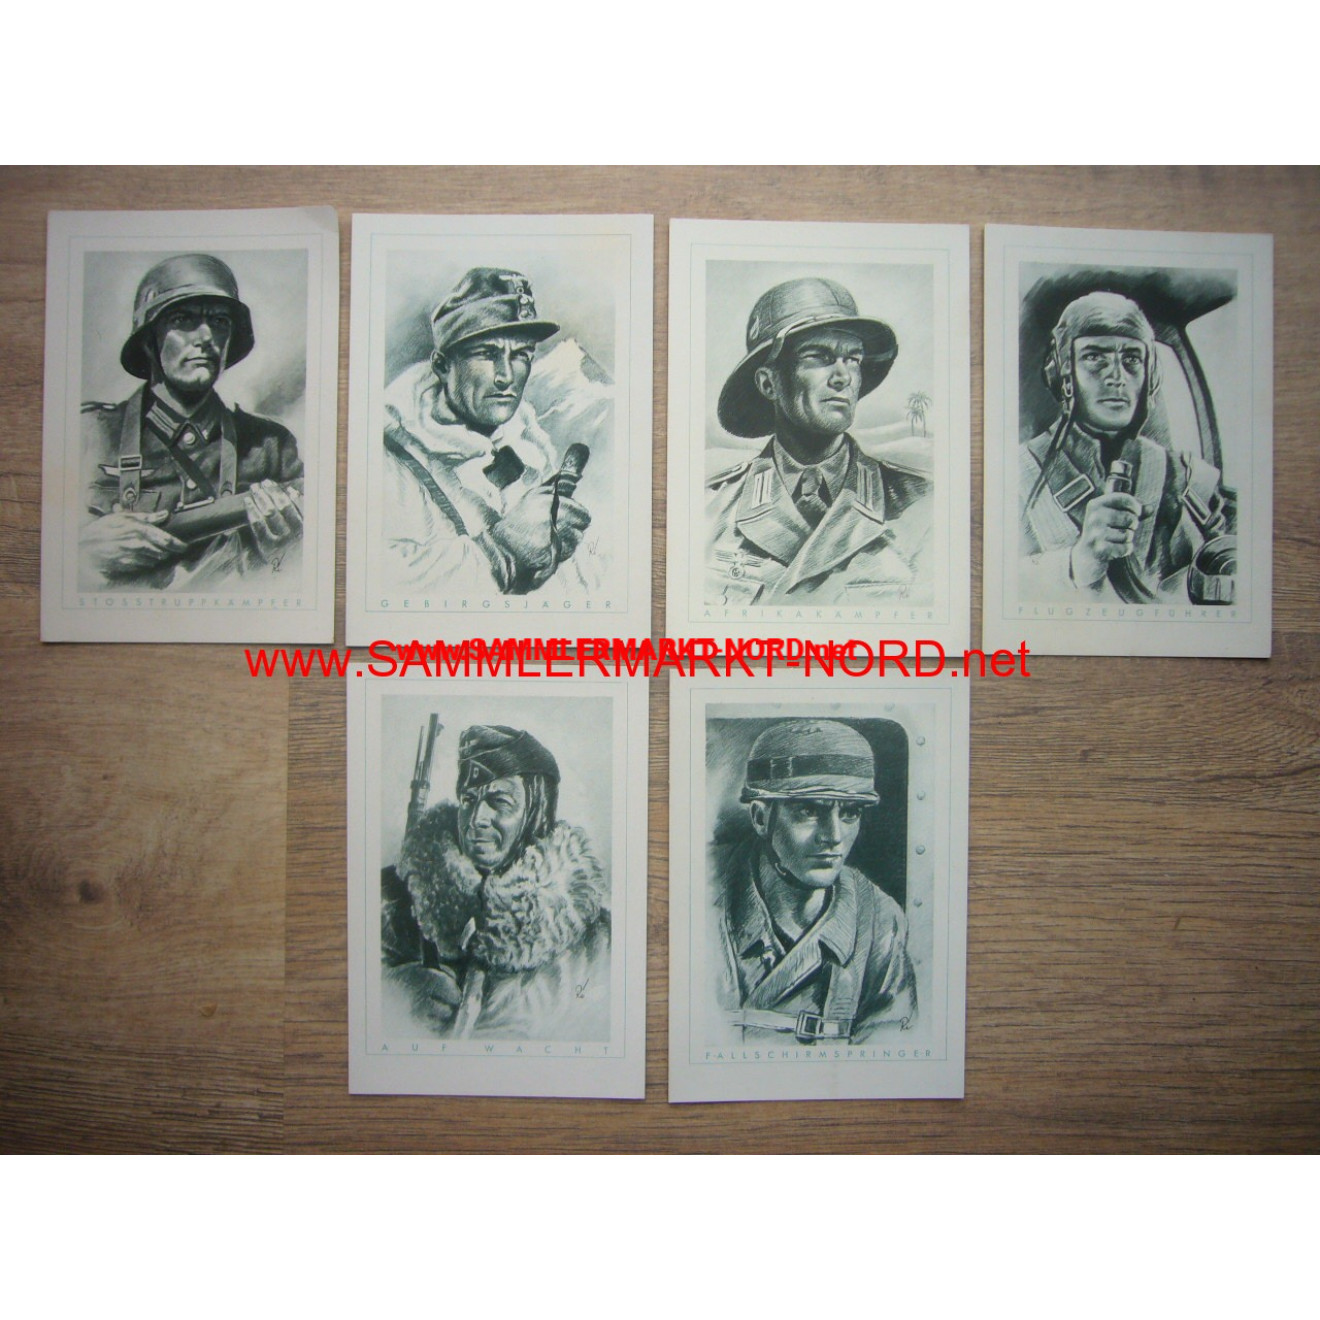 6 x postcard series "The German Soldier"